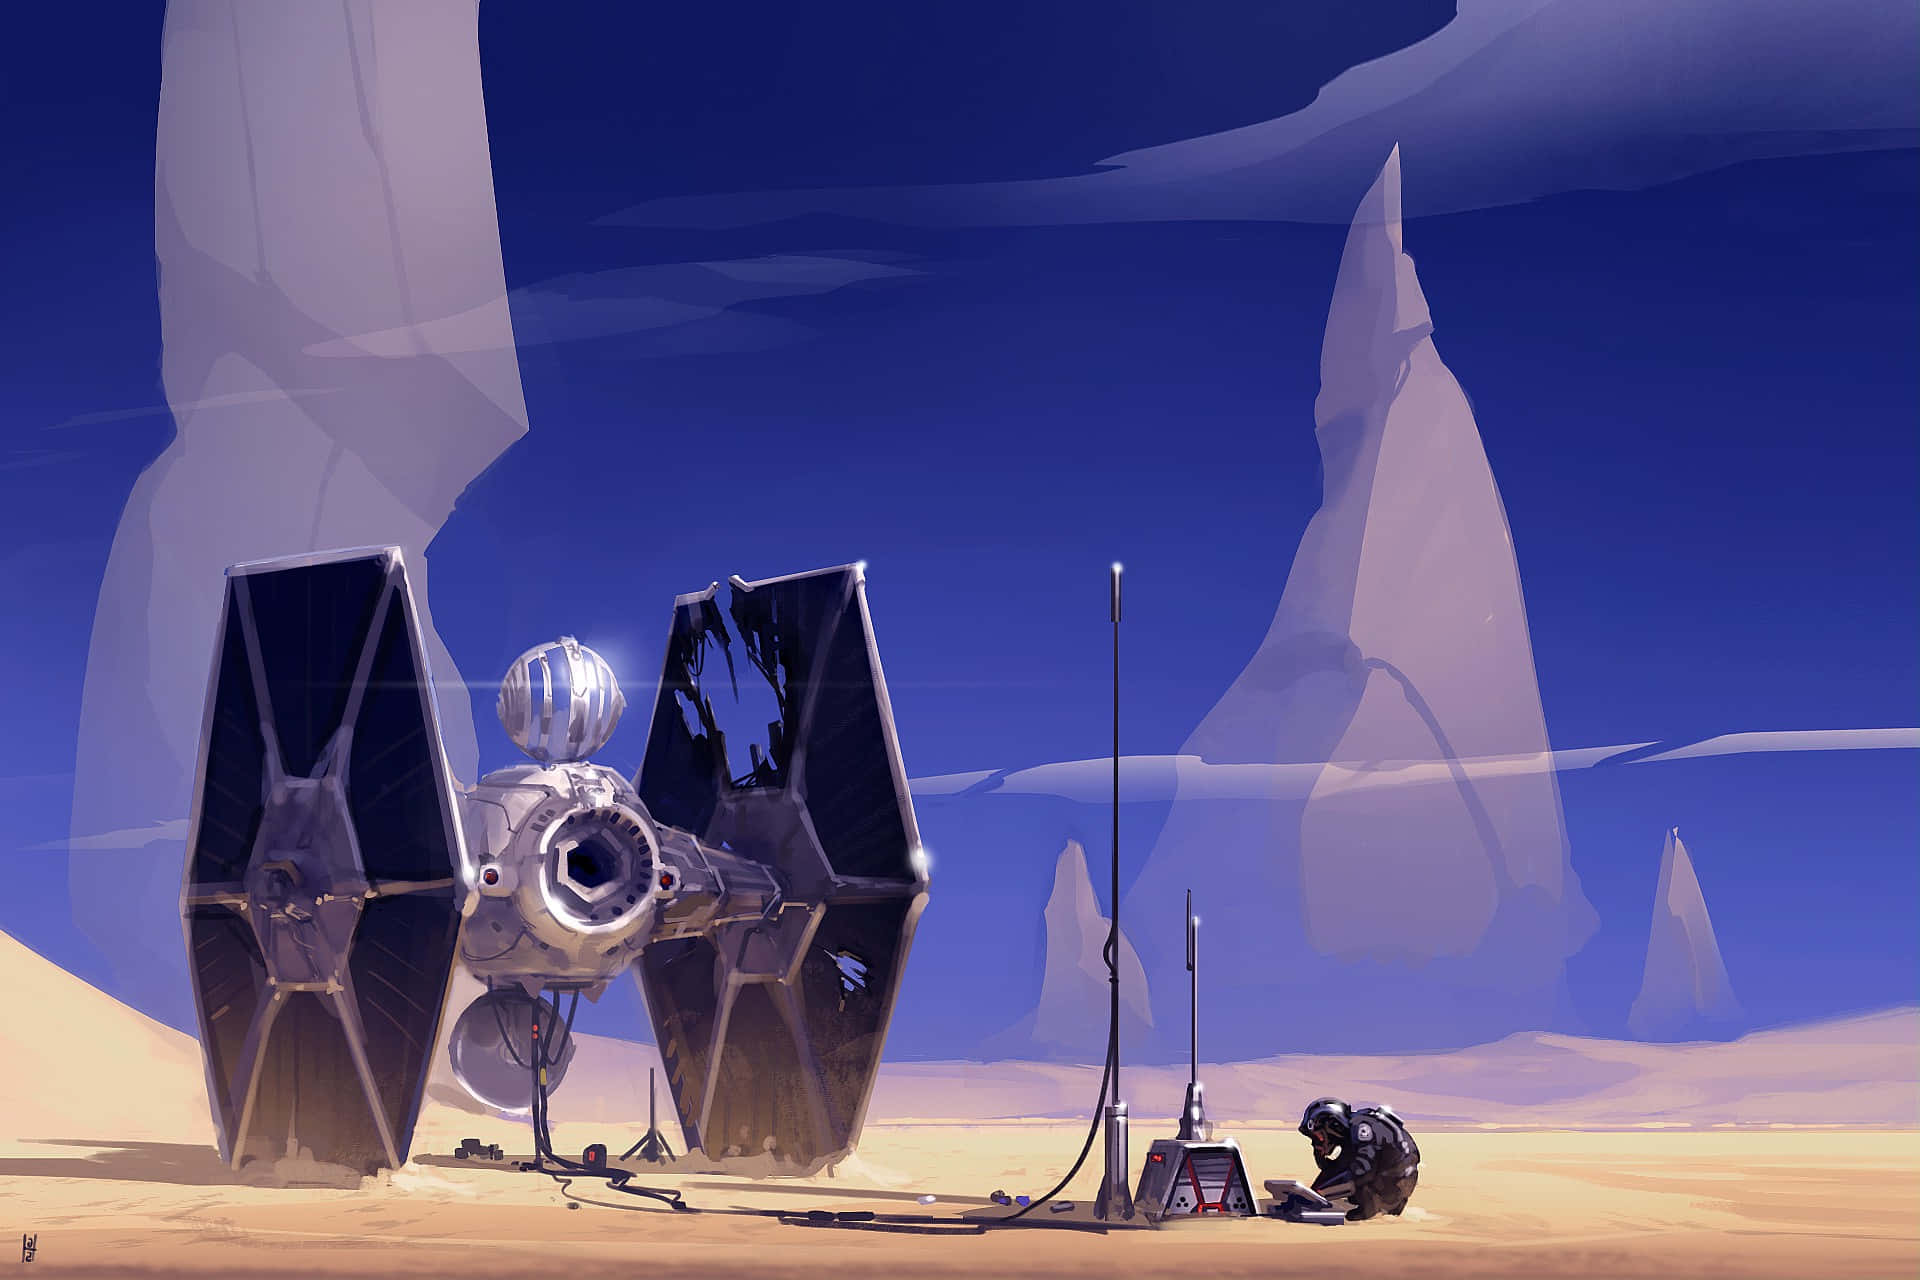 TIE Advanced Starfighter Tatooine Background